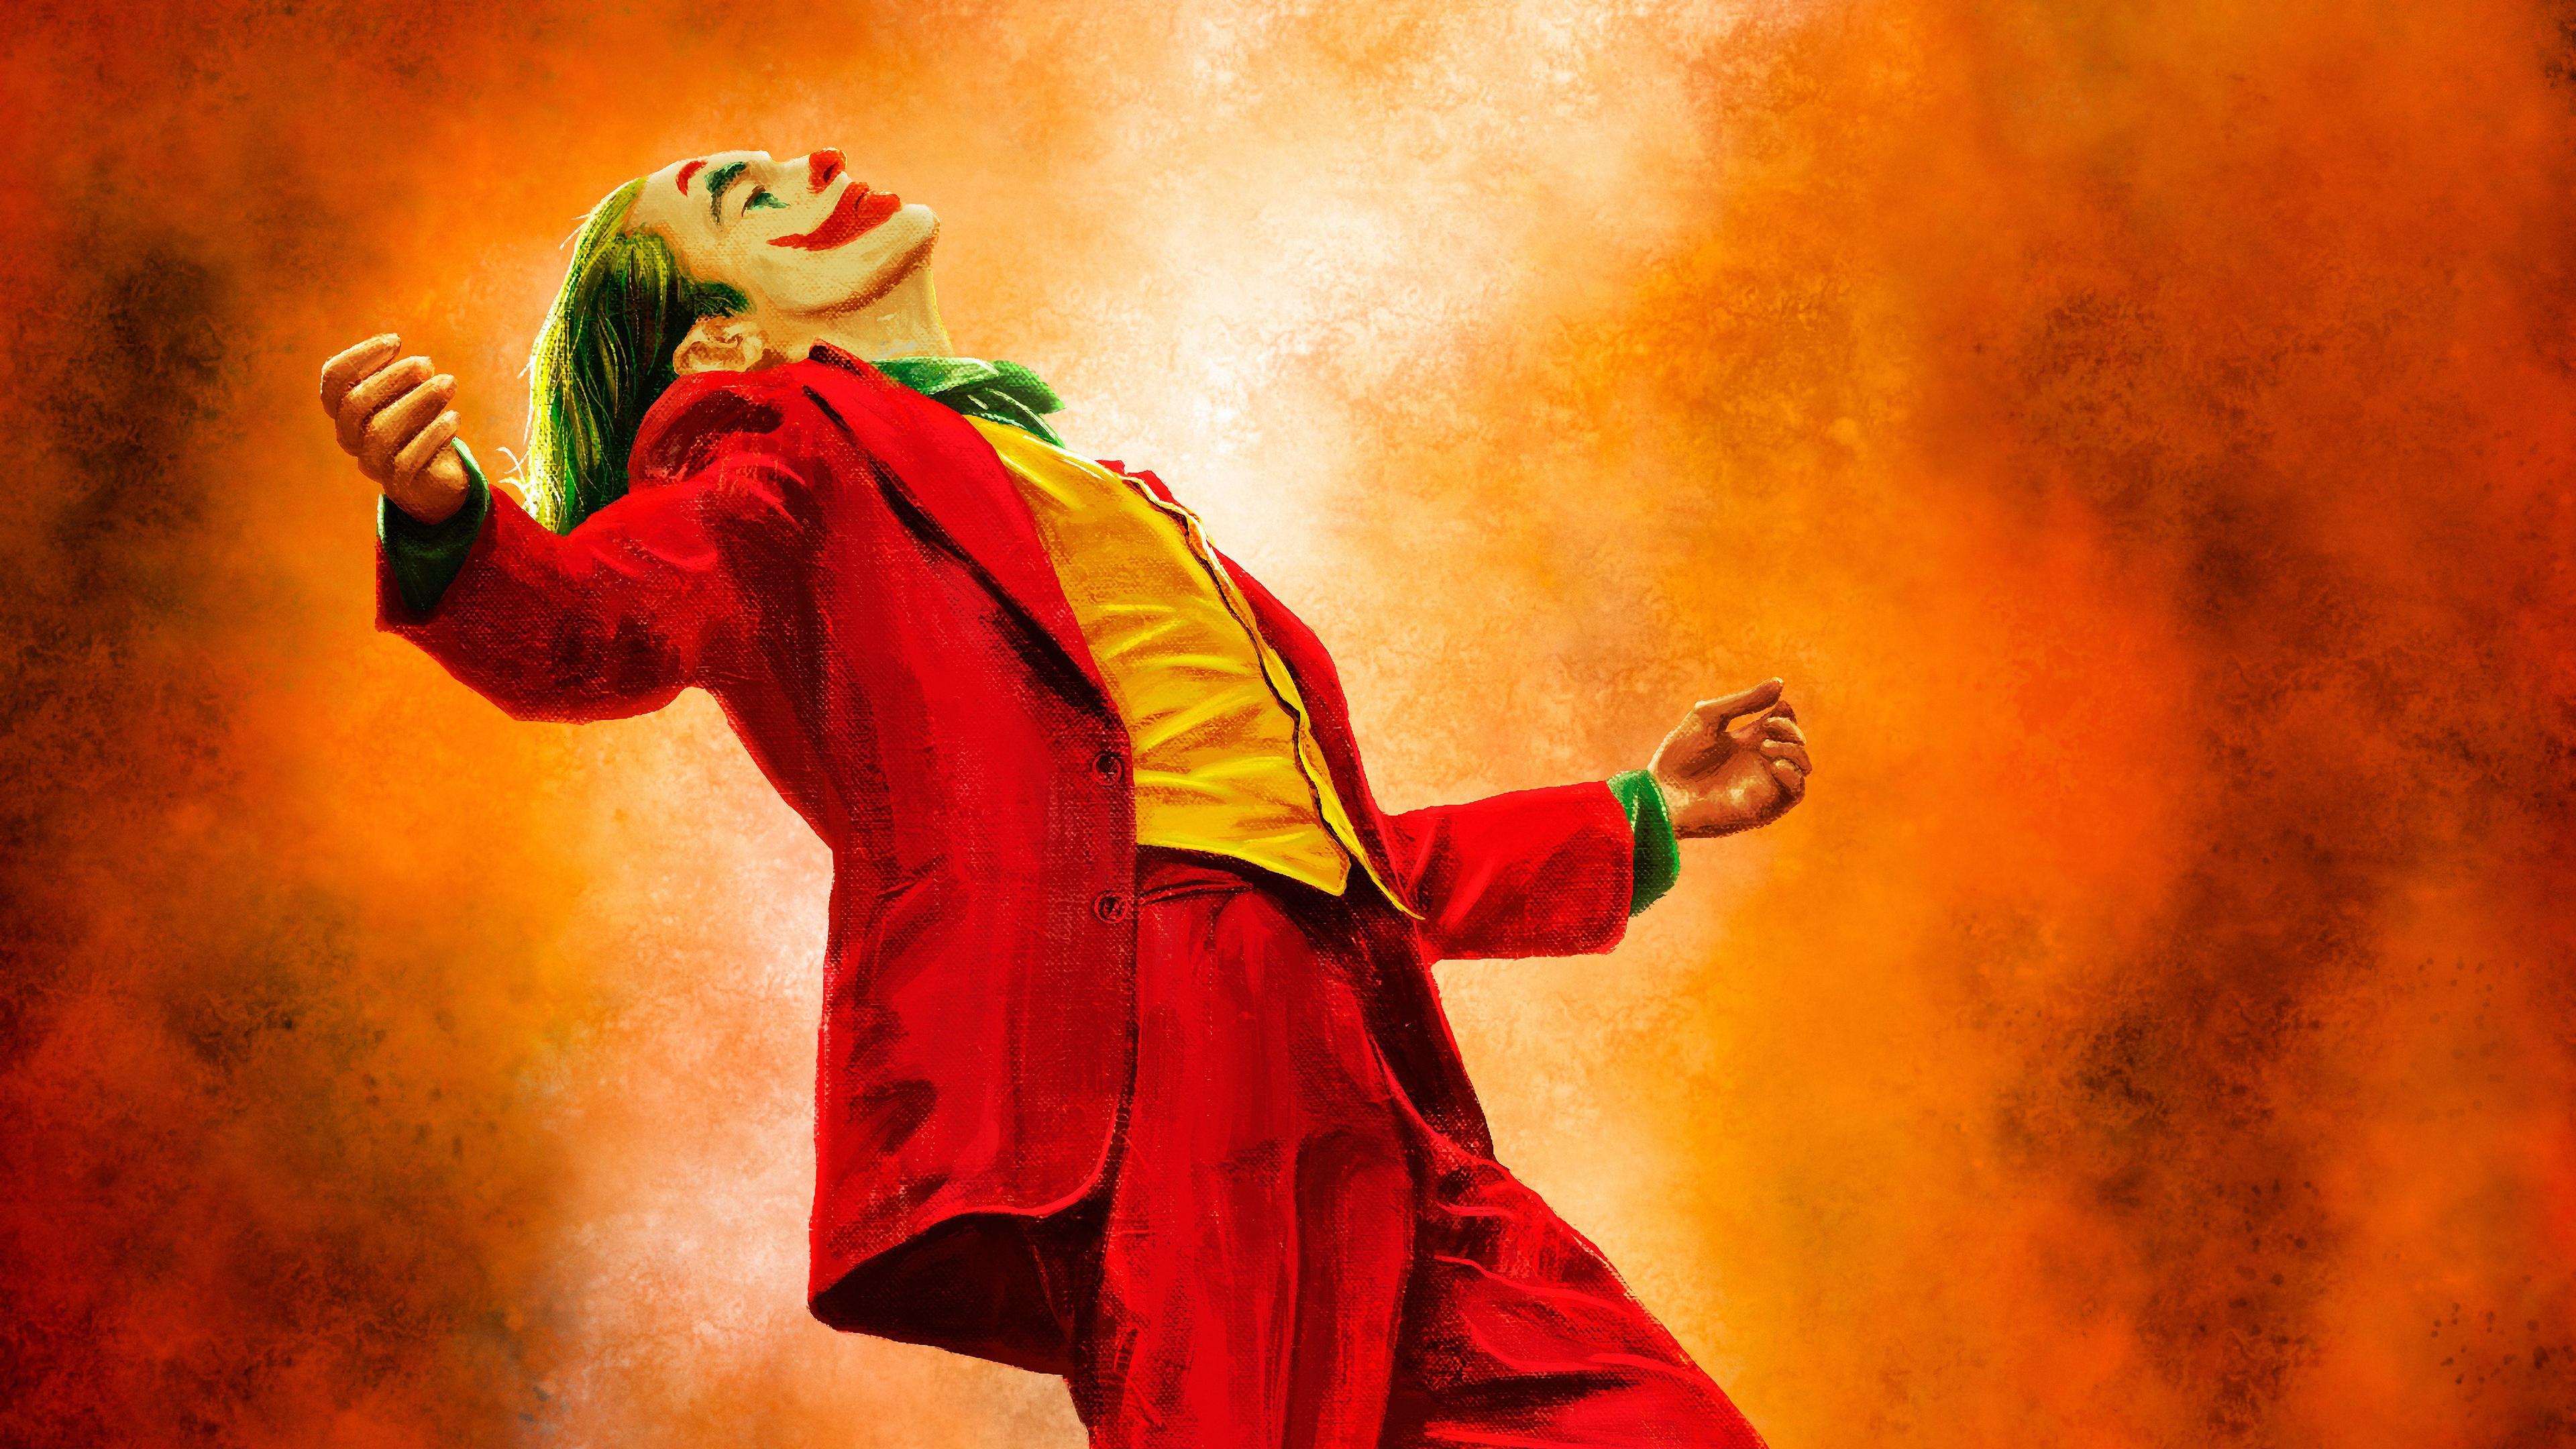 Joker 4k Ultra HD Wallpaper. Background Imagex2160